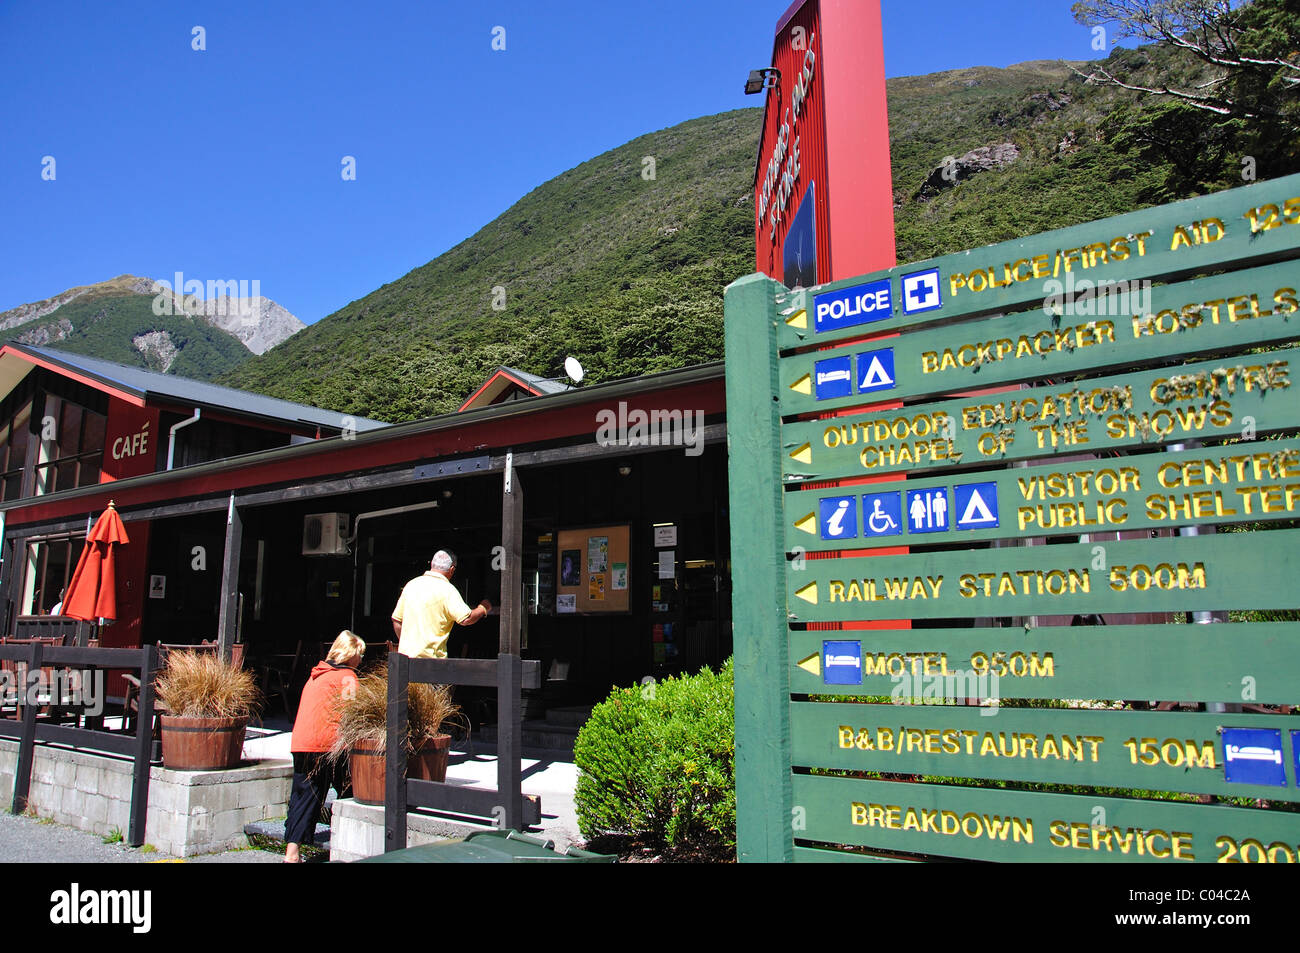 Arthur's Pass Store & Cafe, Arthur's Pass National Park, Canterbury, South Island, New Zealand Stock Photo